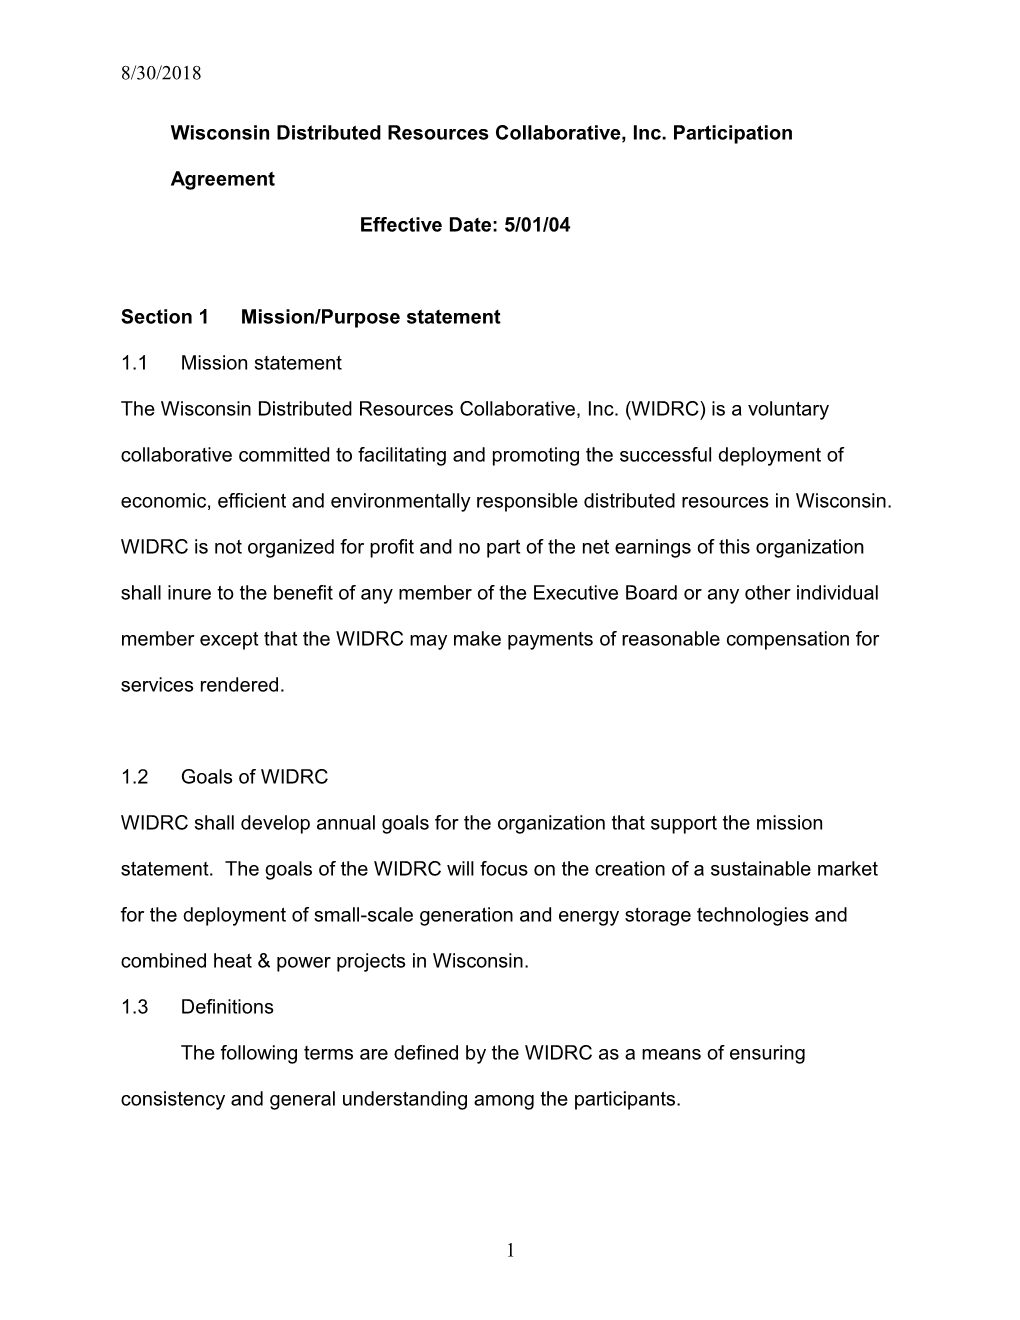 WIDRC Participation Agreement V5/04